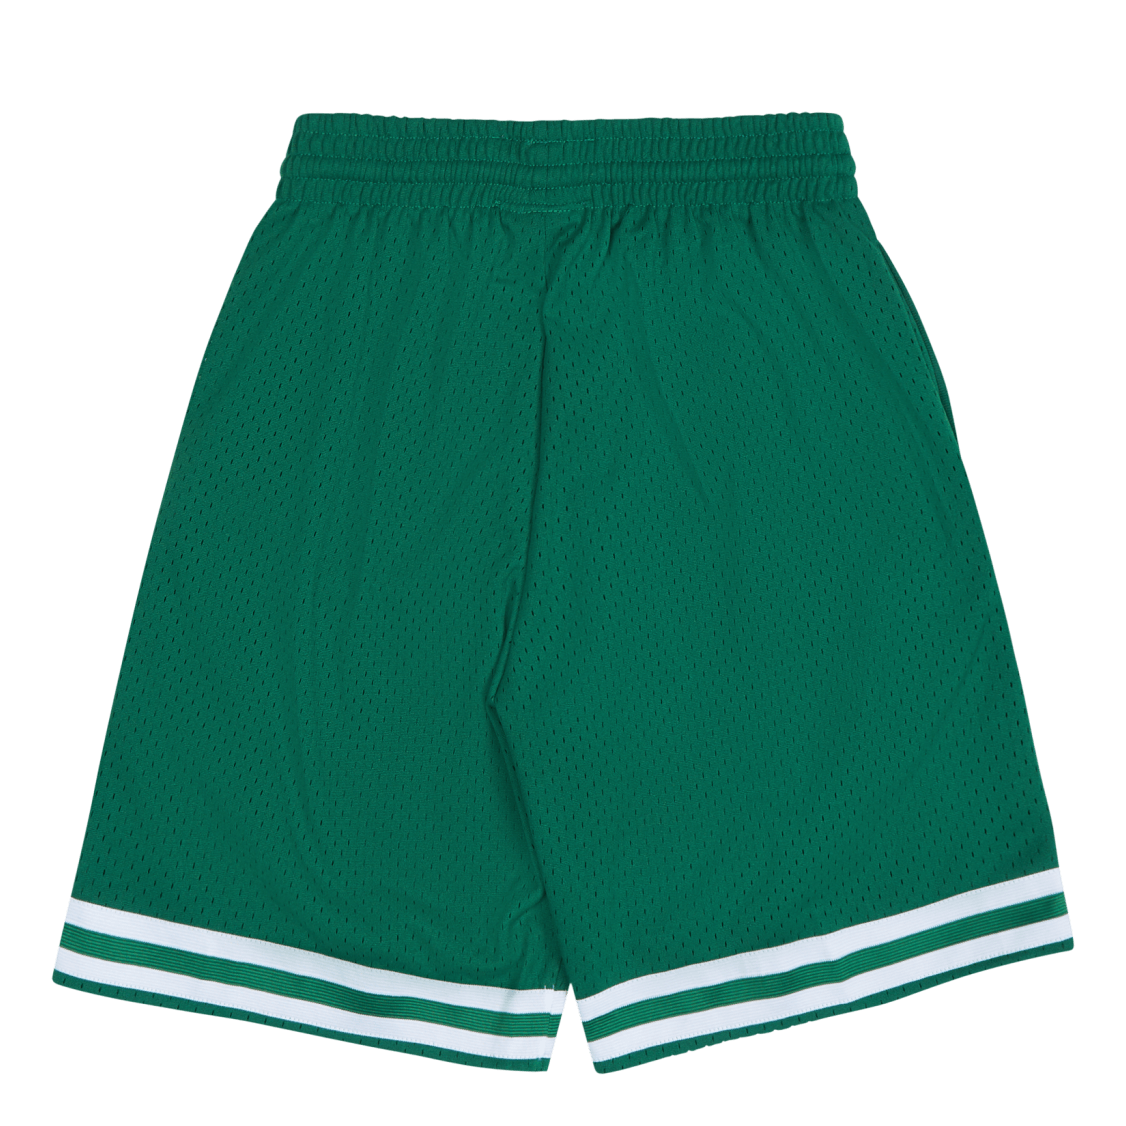 Celtics Swingman Shorts